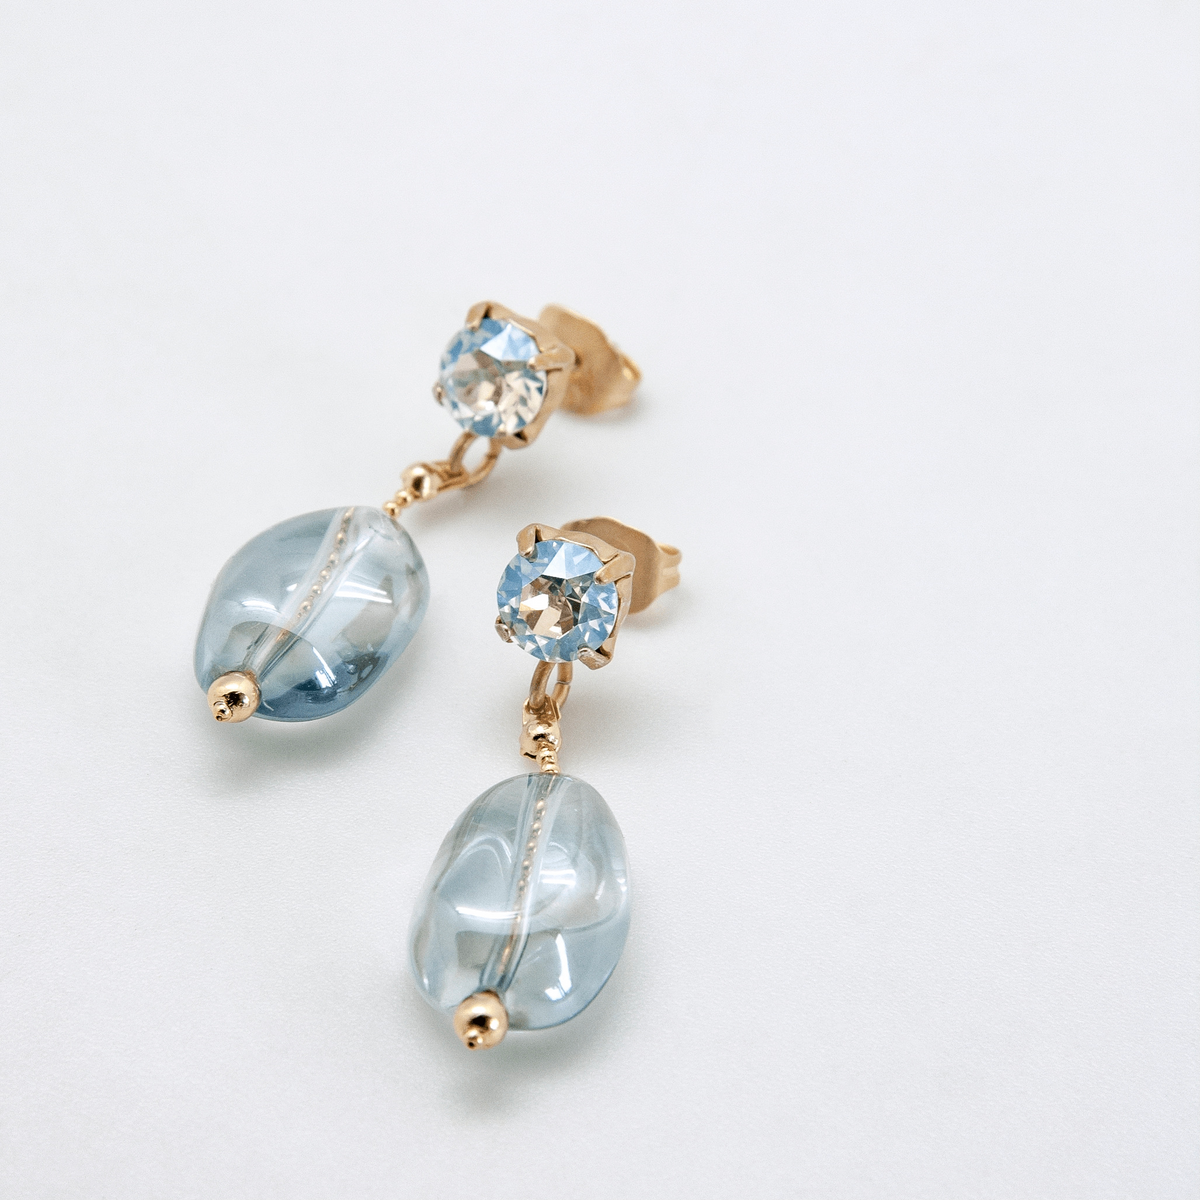 Blue glass nugget drop earrings with rhinestone stud posts